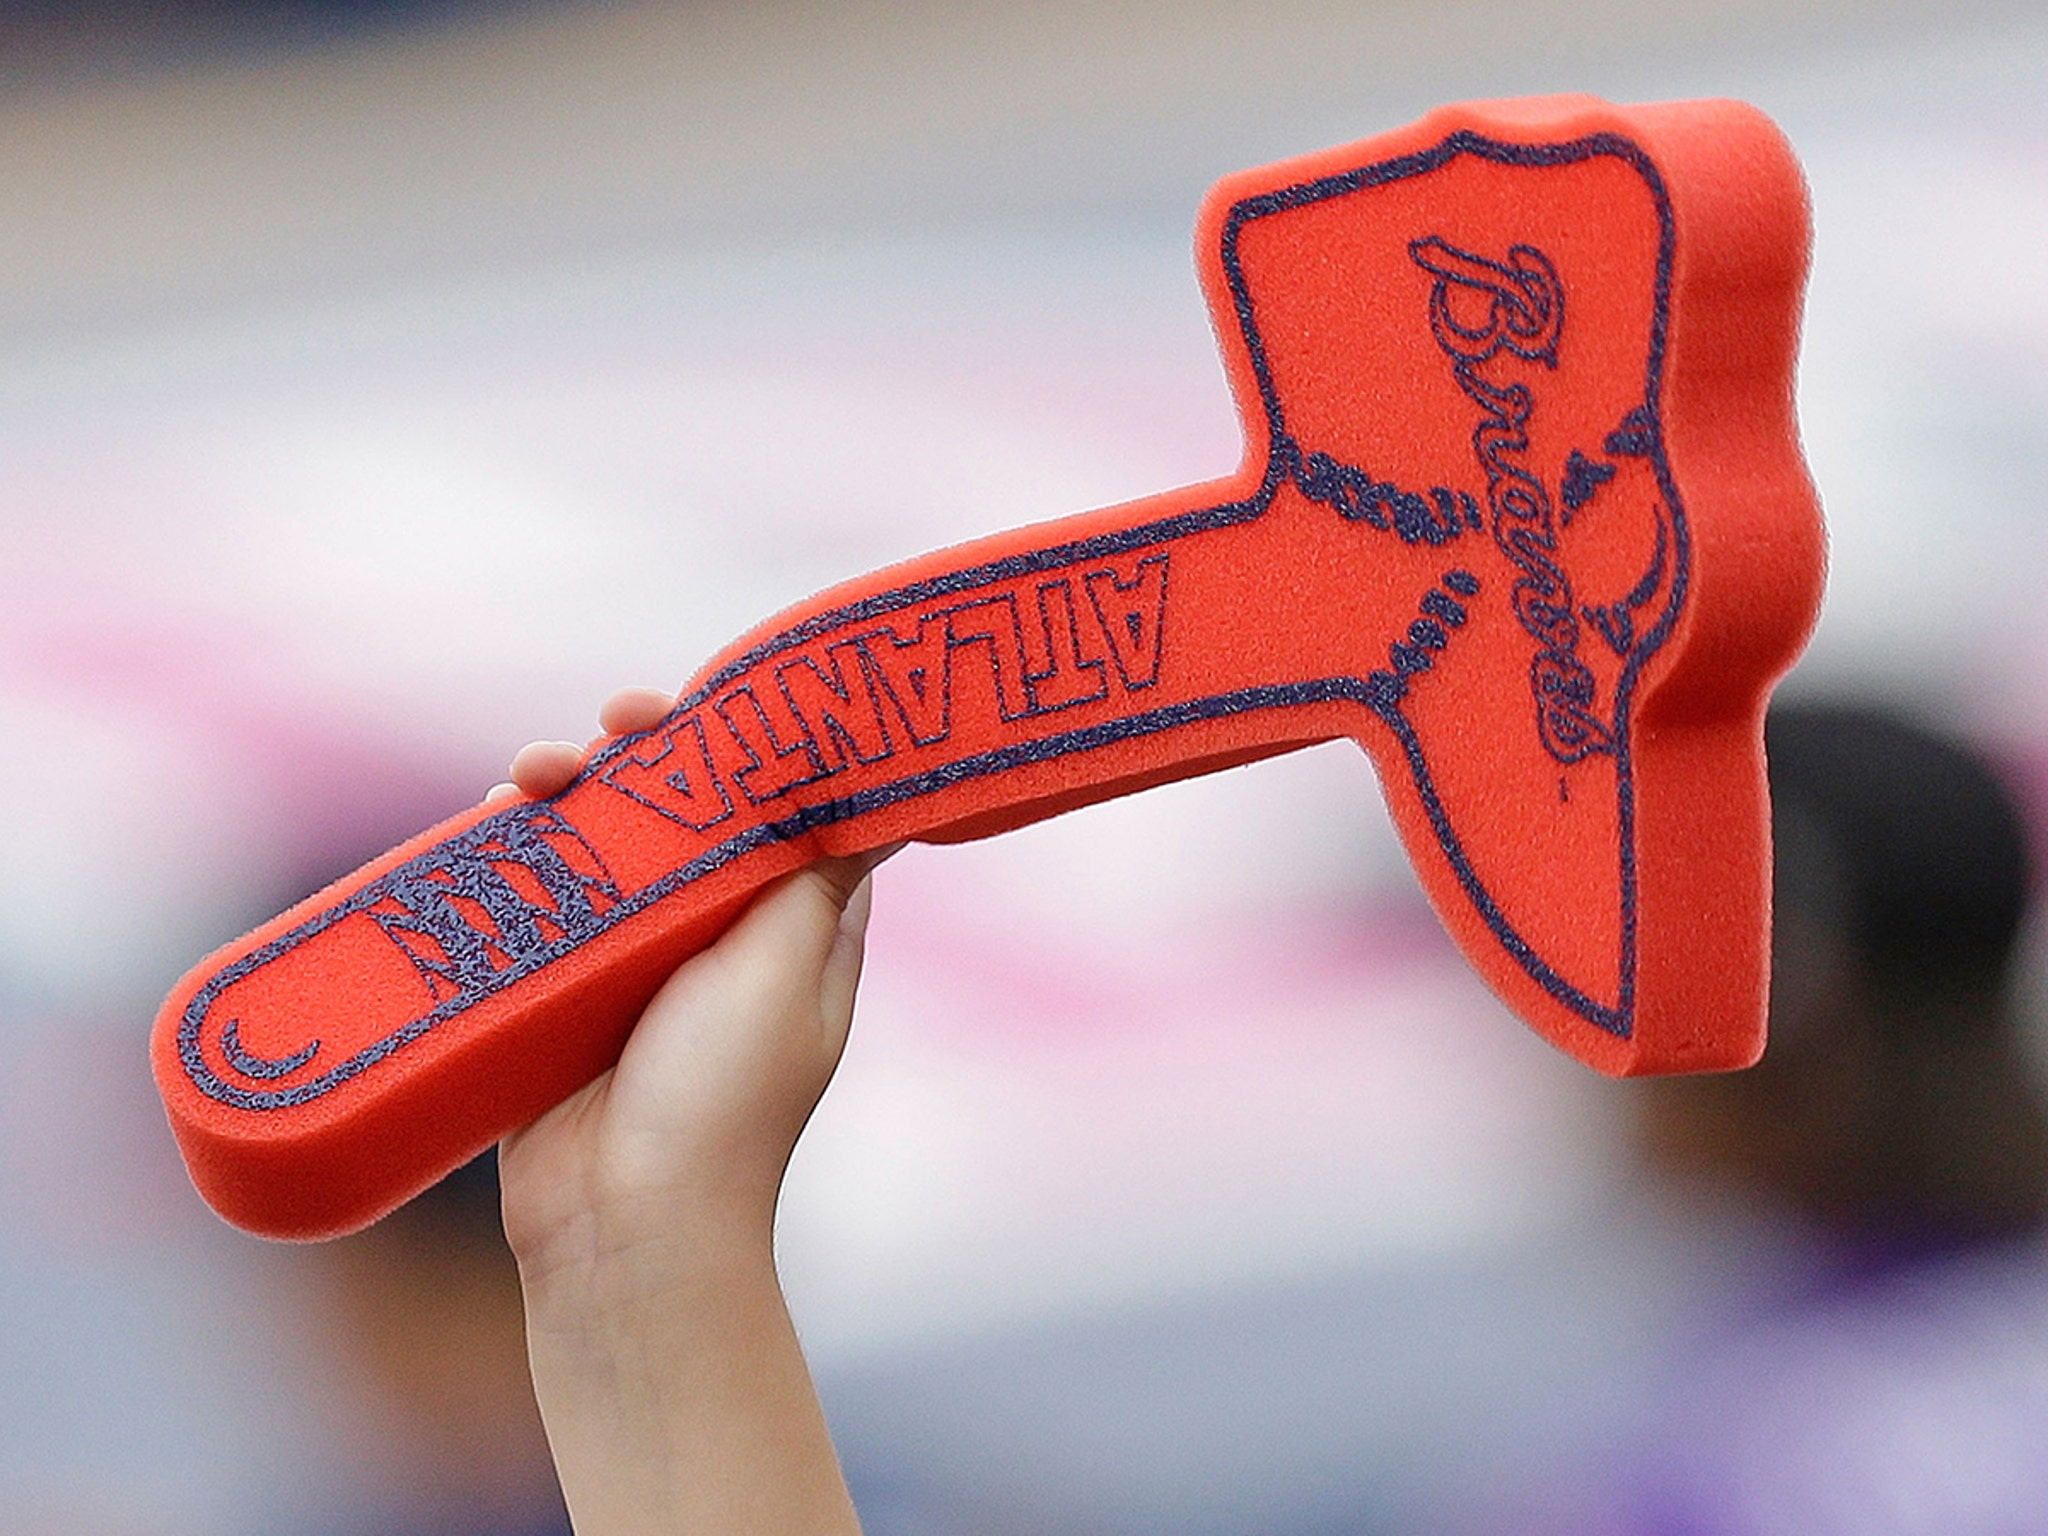 Braves End Foam-Tomahawk Handout After Native American Pitcher's Criticism  